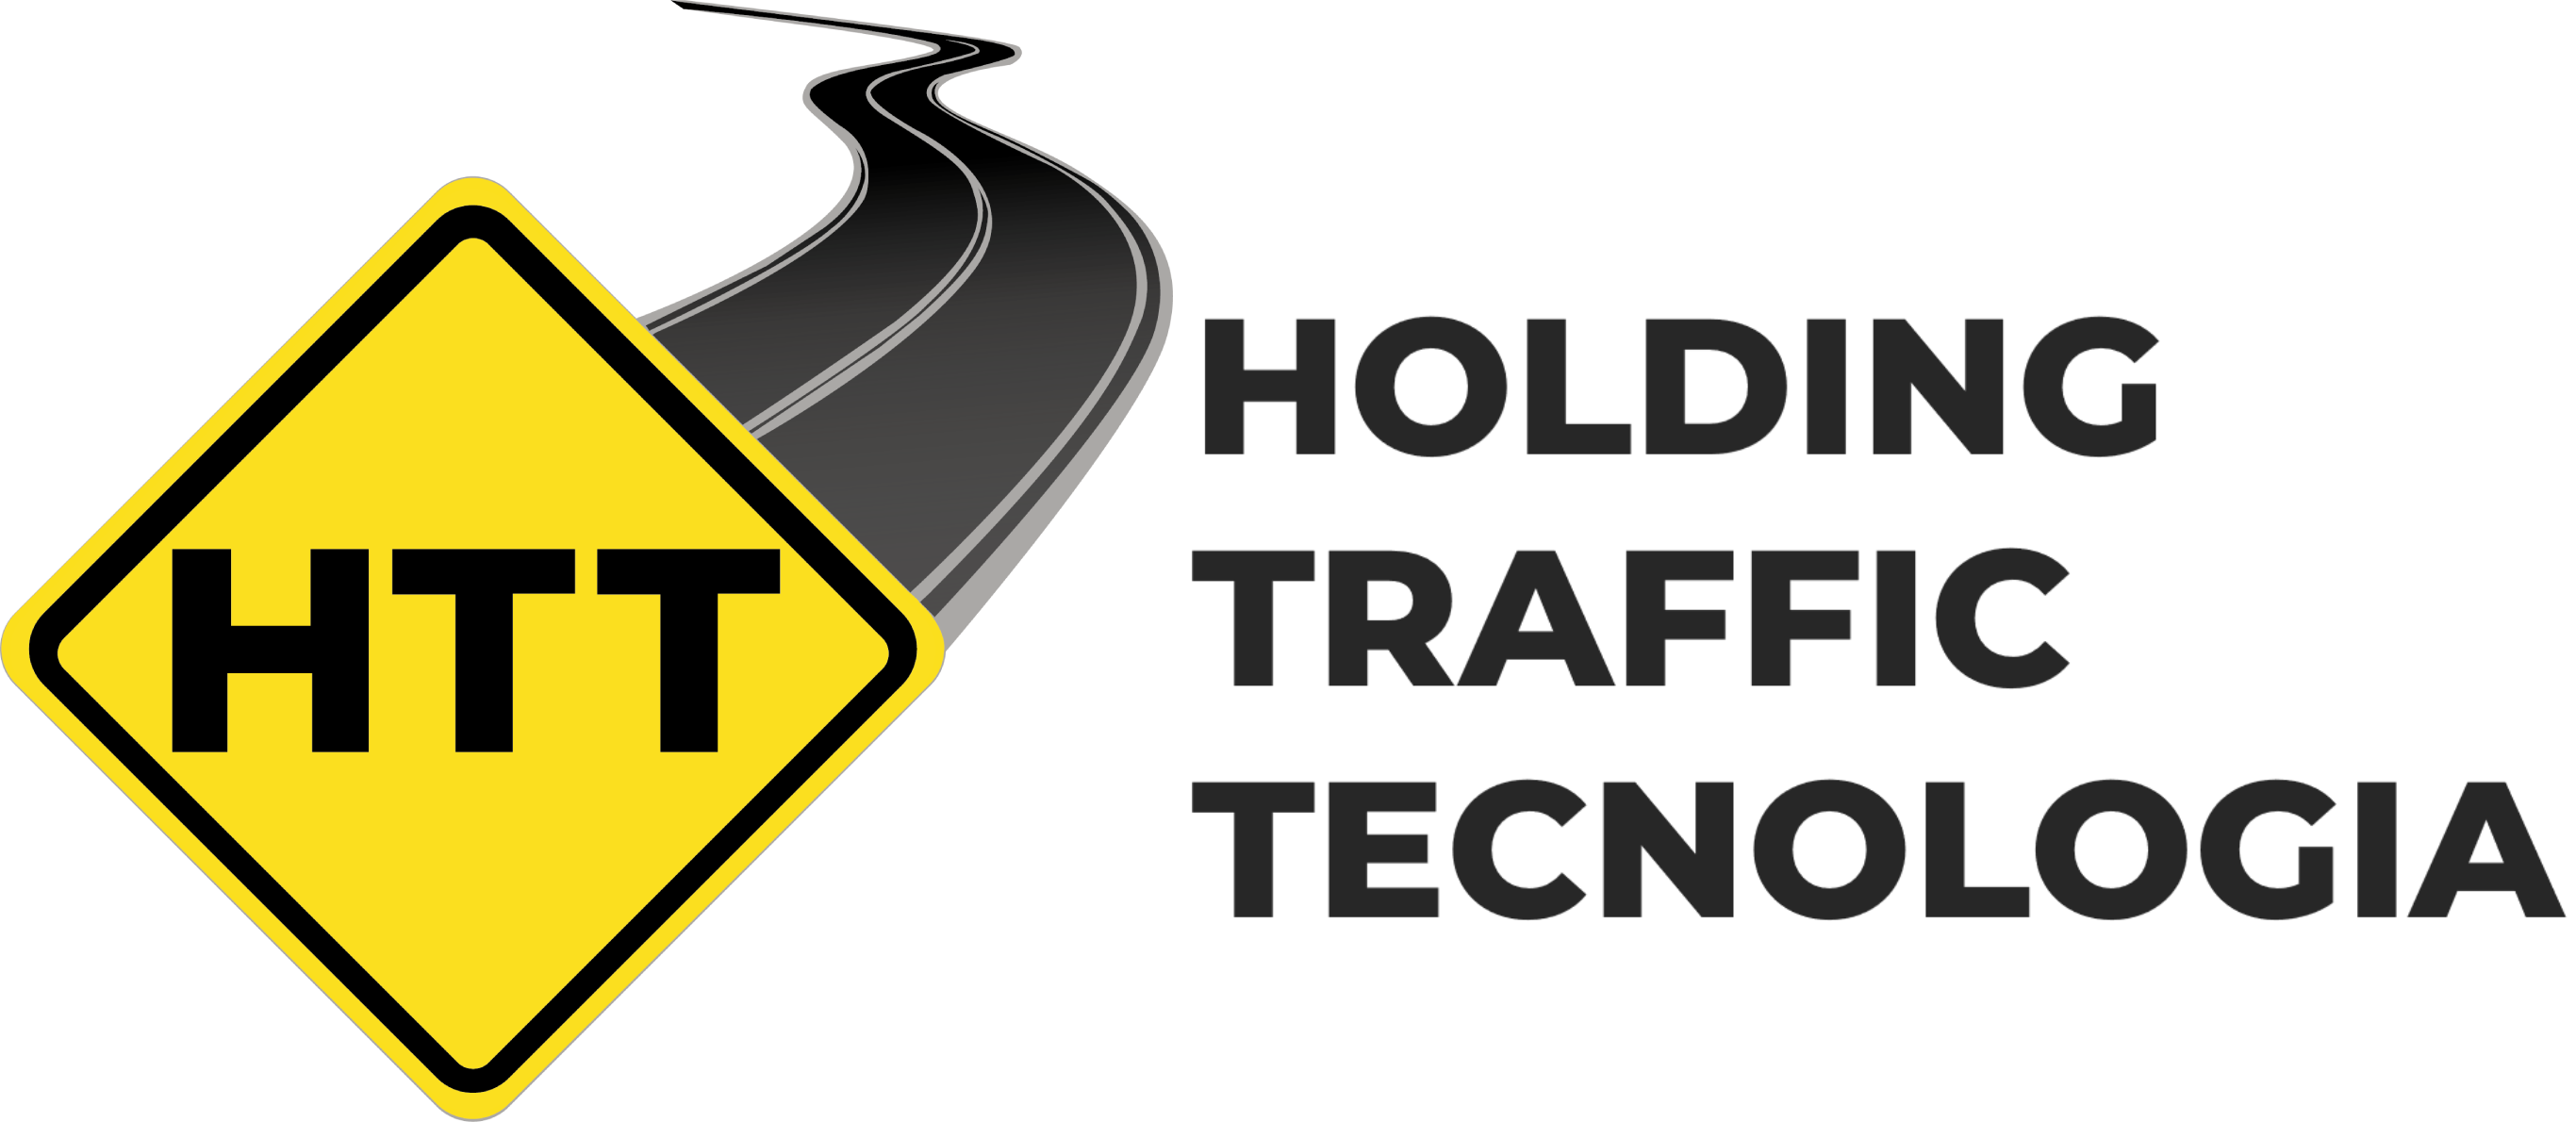 Holding Traffic Tecnologia